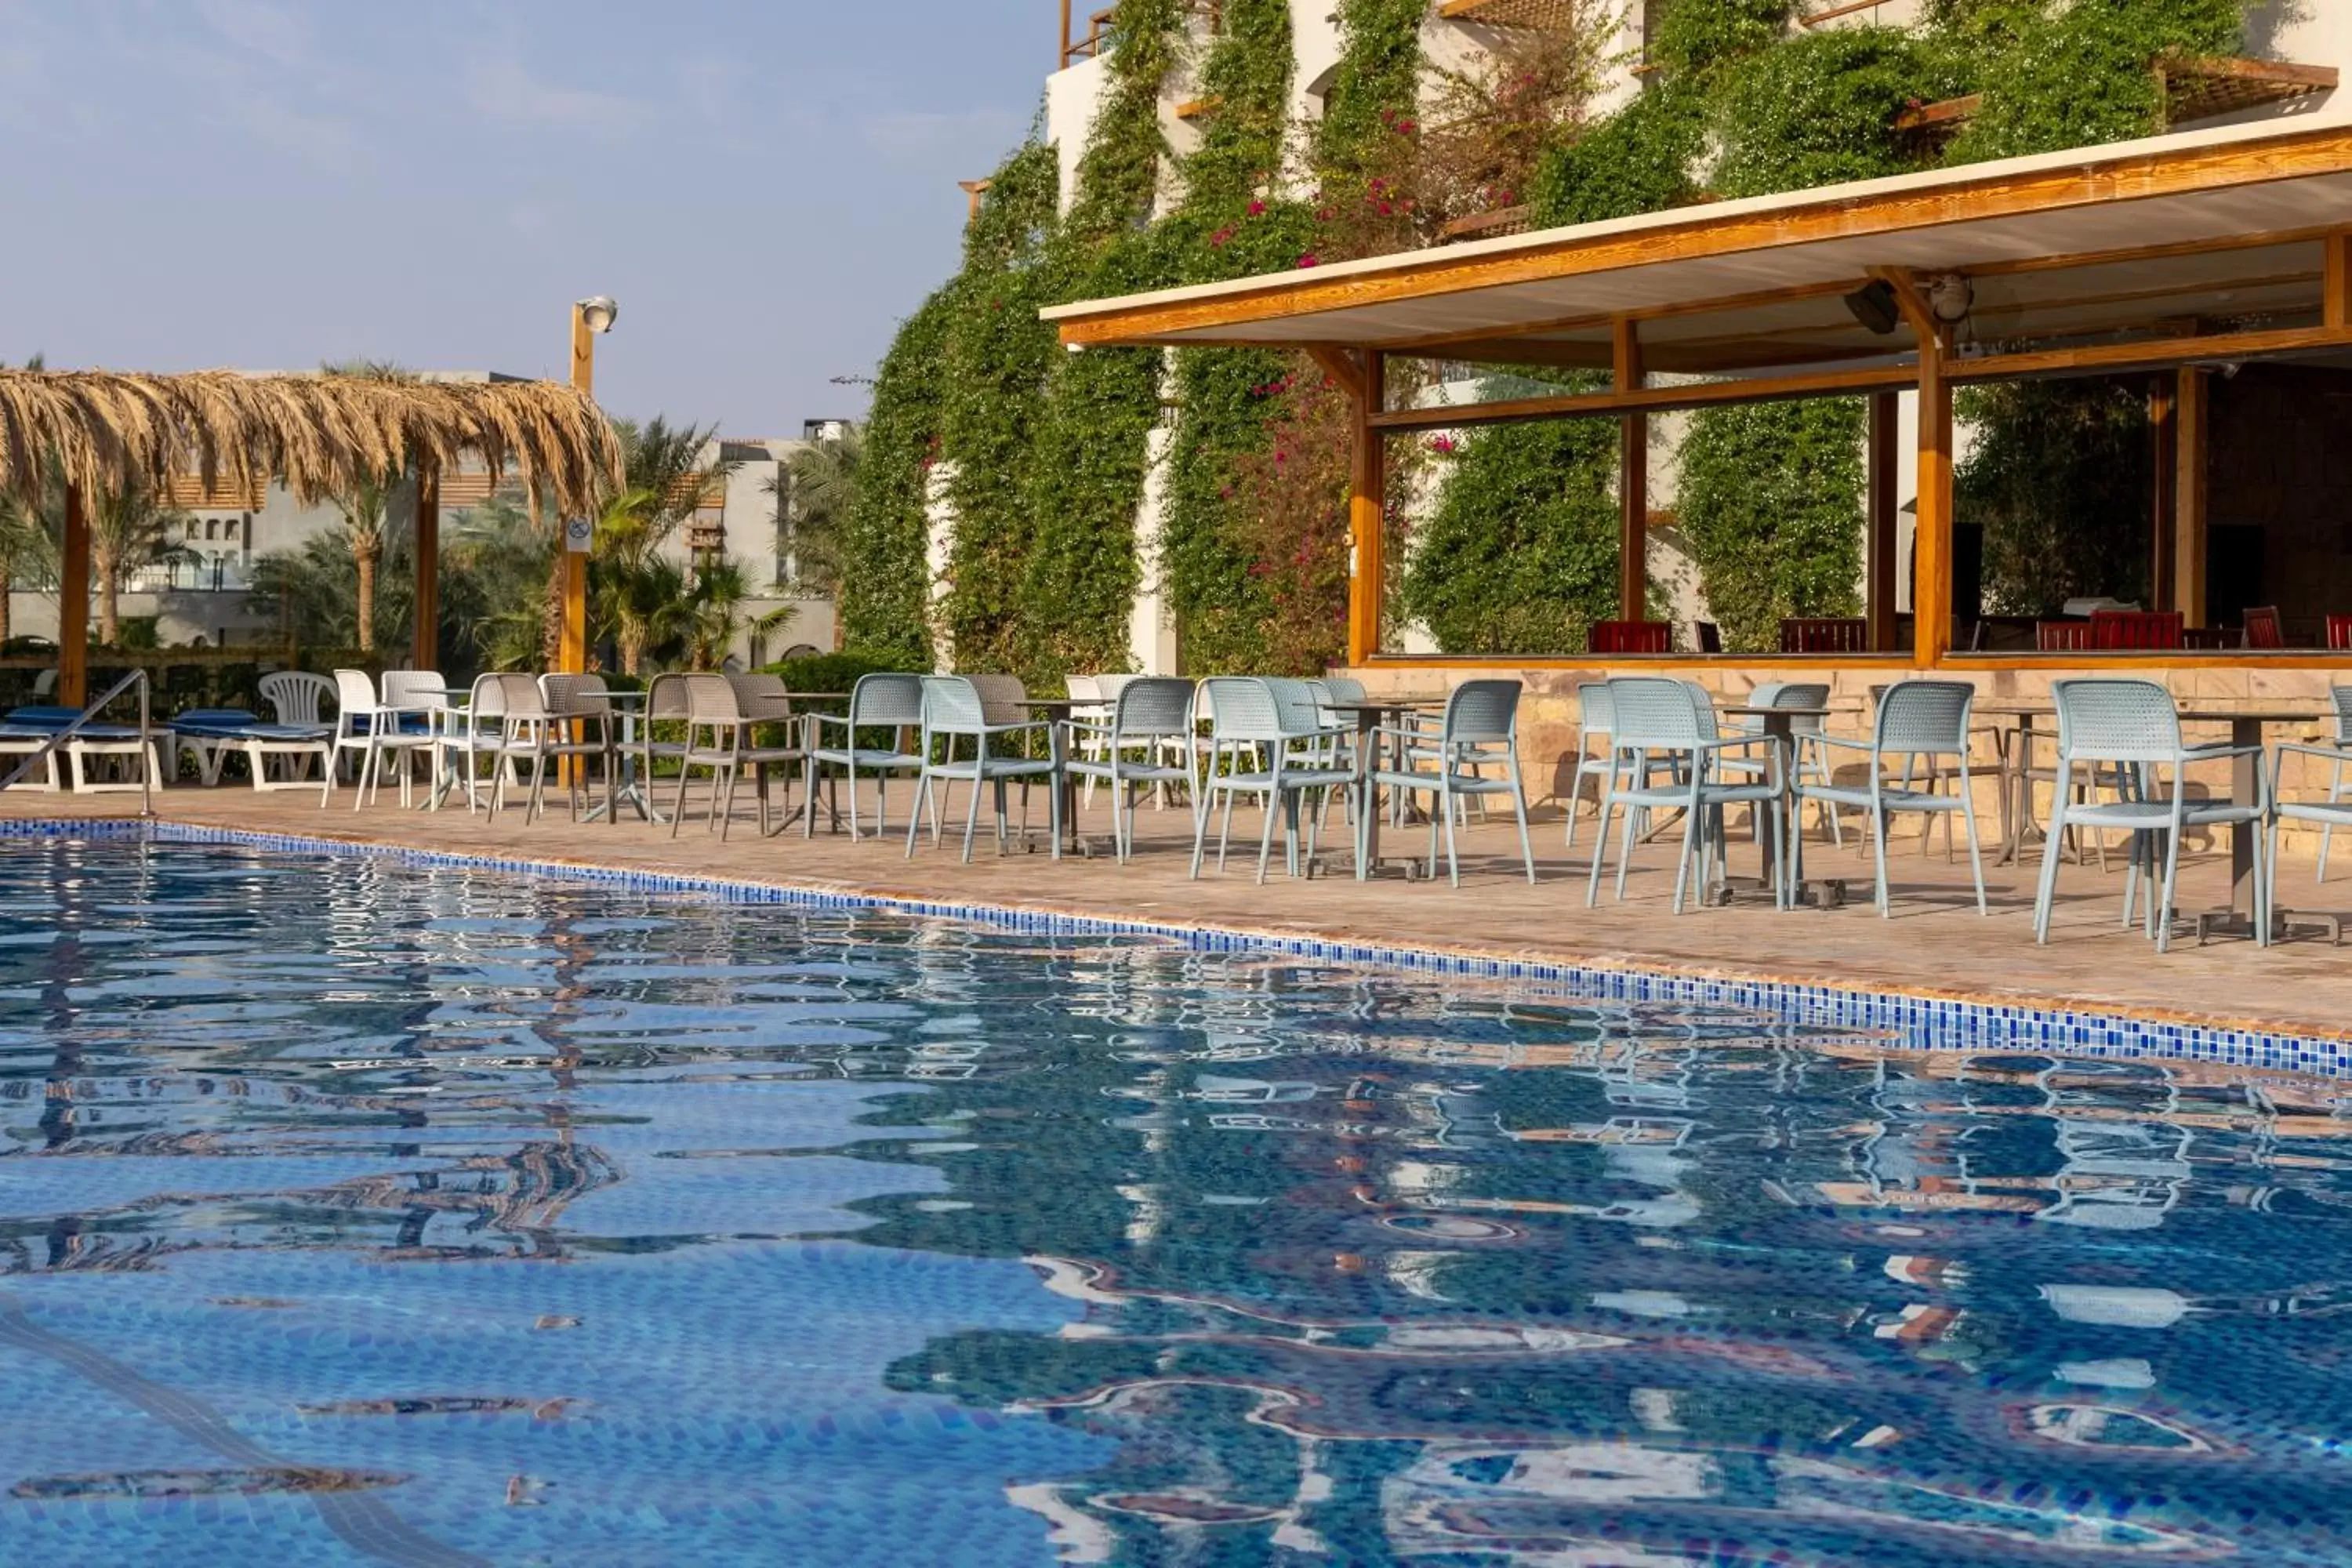 Swimming Pool in Fort Arabesque Resort, Spa & Villas